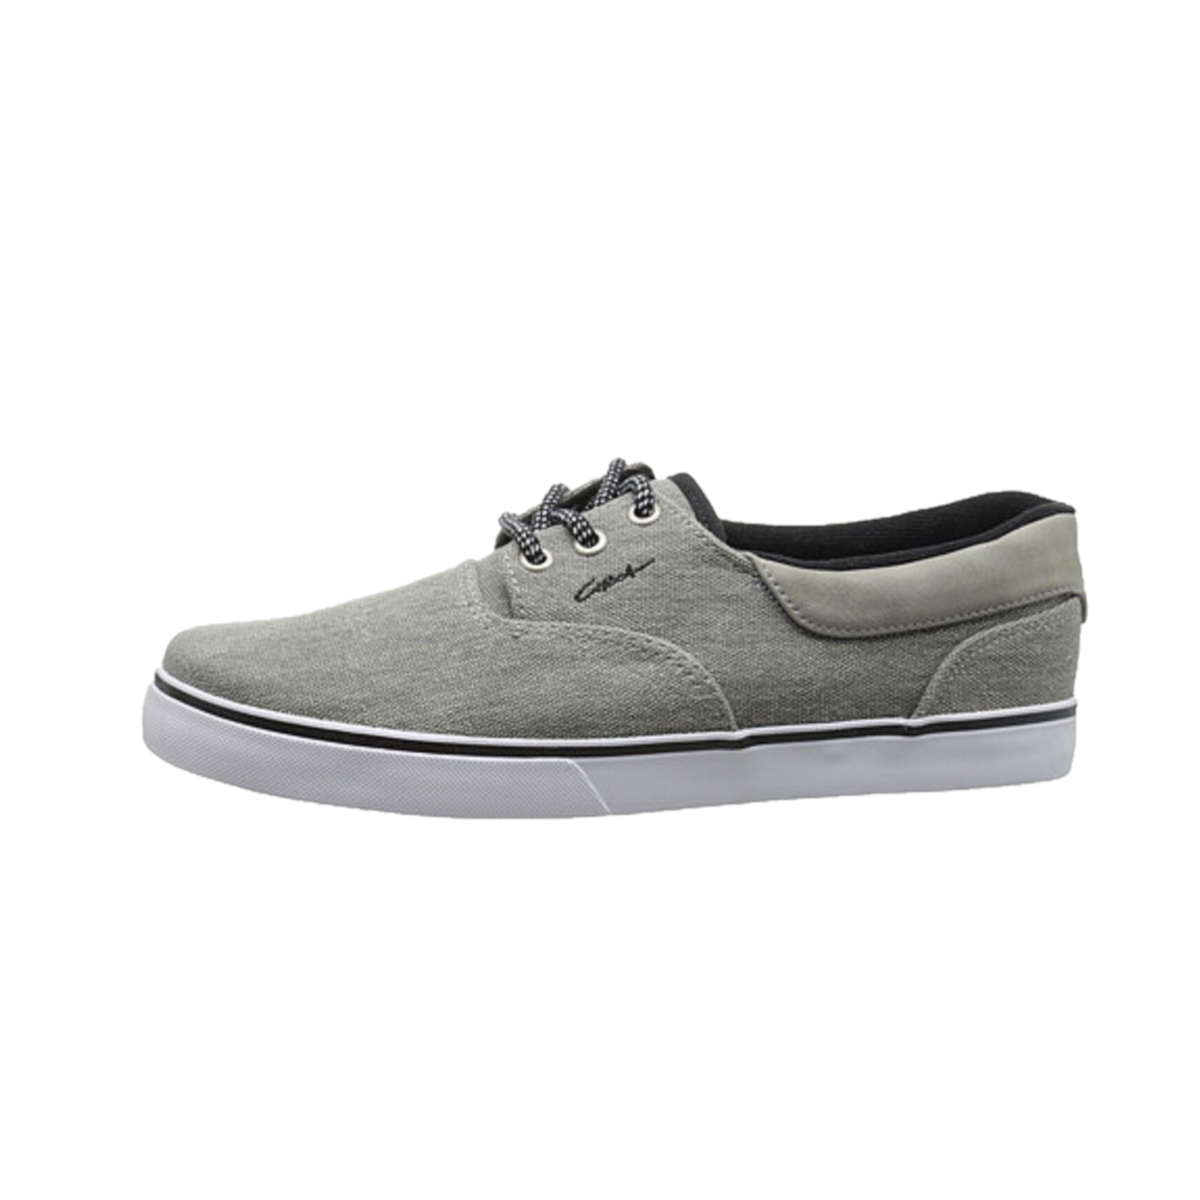 CIRCA VALEOSE-GRB VALEO SE MN'S (Medium) Gray/Black Canvas Skate Shoes